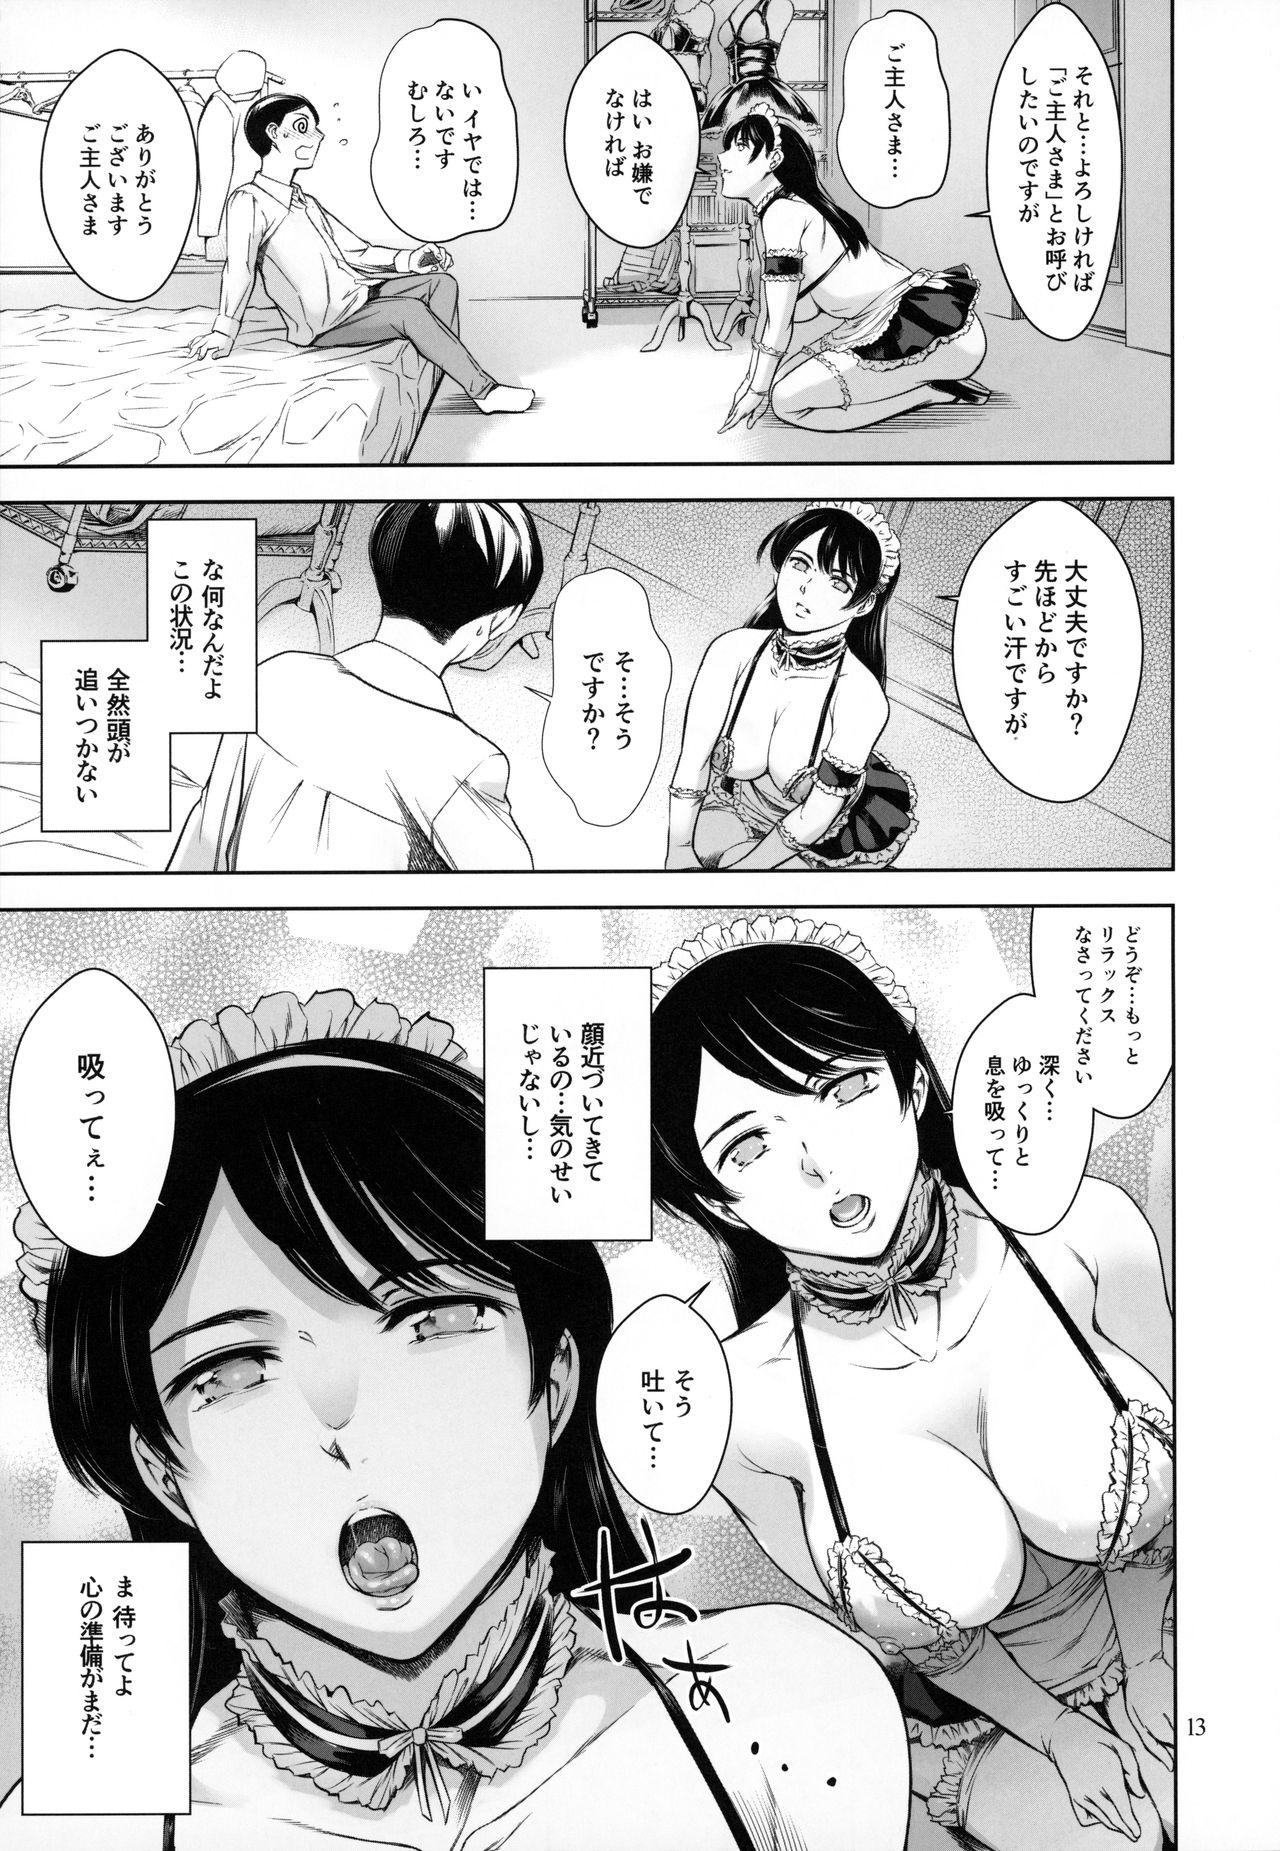 Rubbing Uchi no Maid - Original Work - Page 12